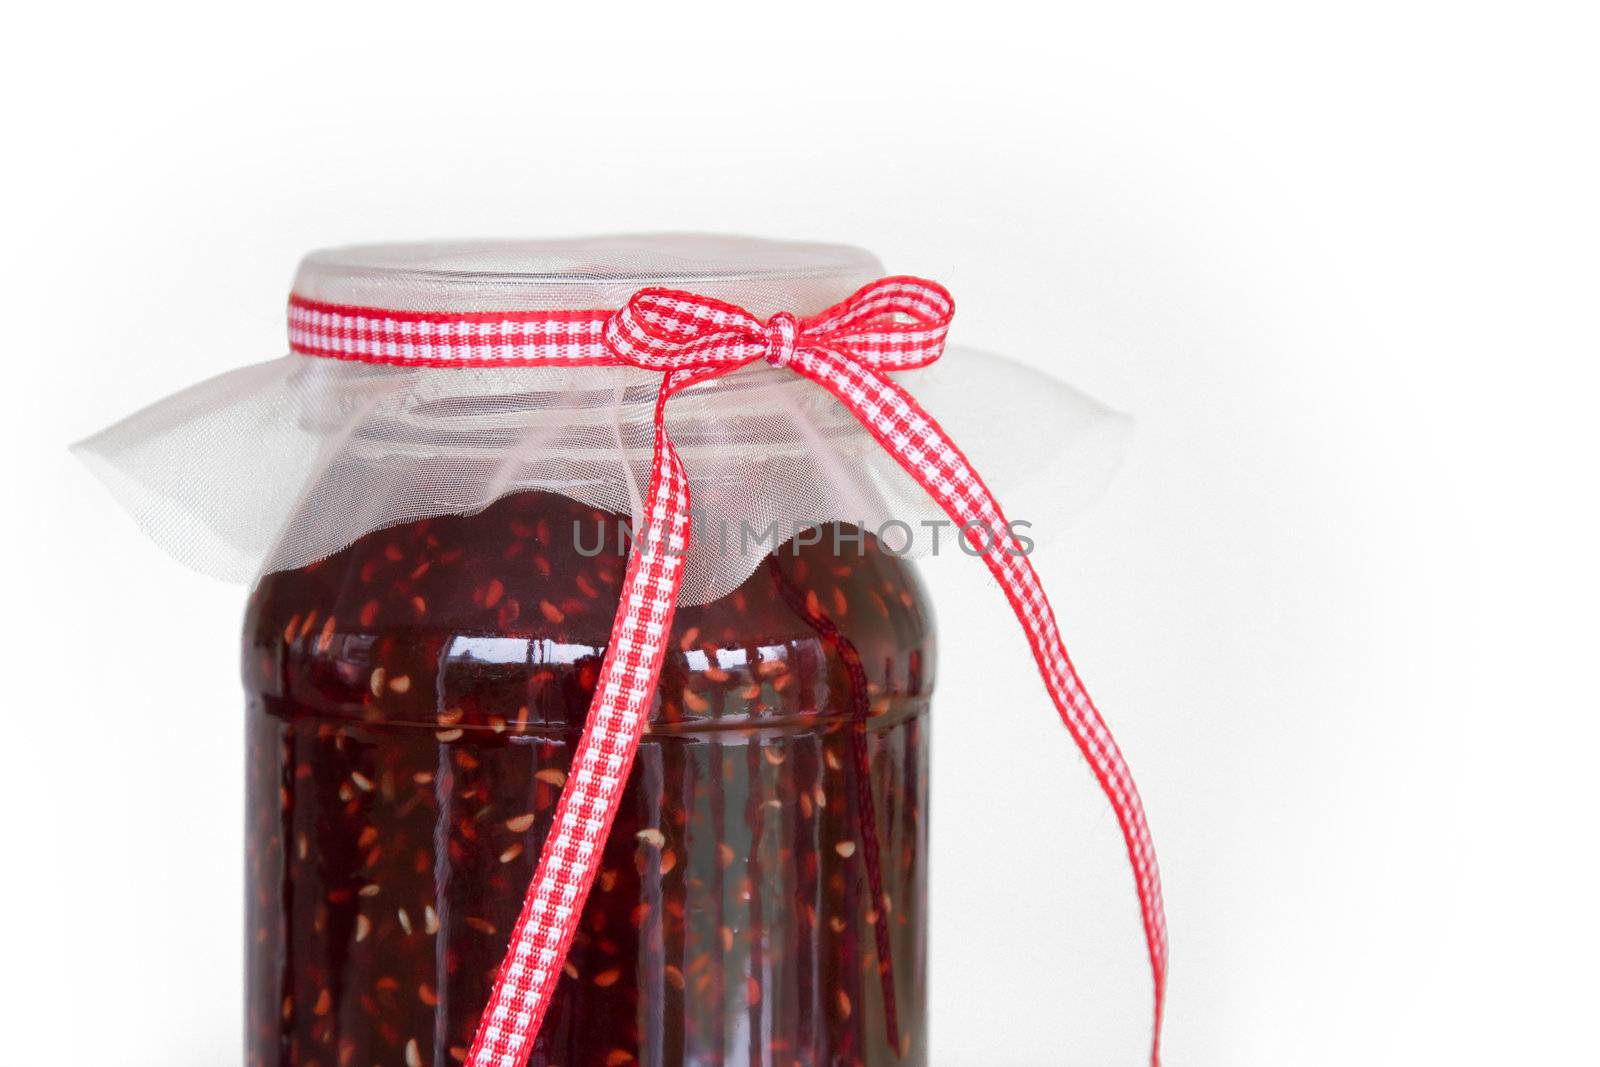 Raspberry jam by RuthBlack